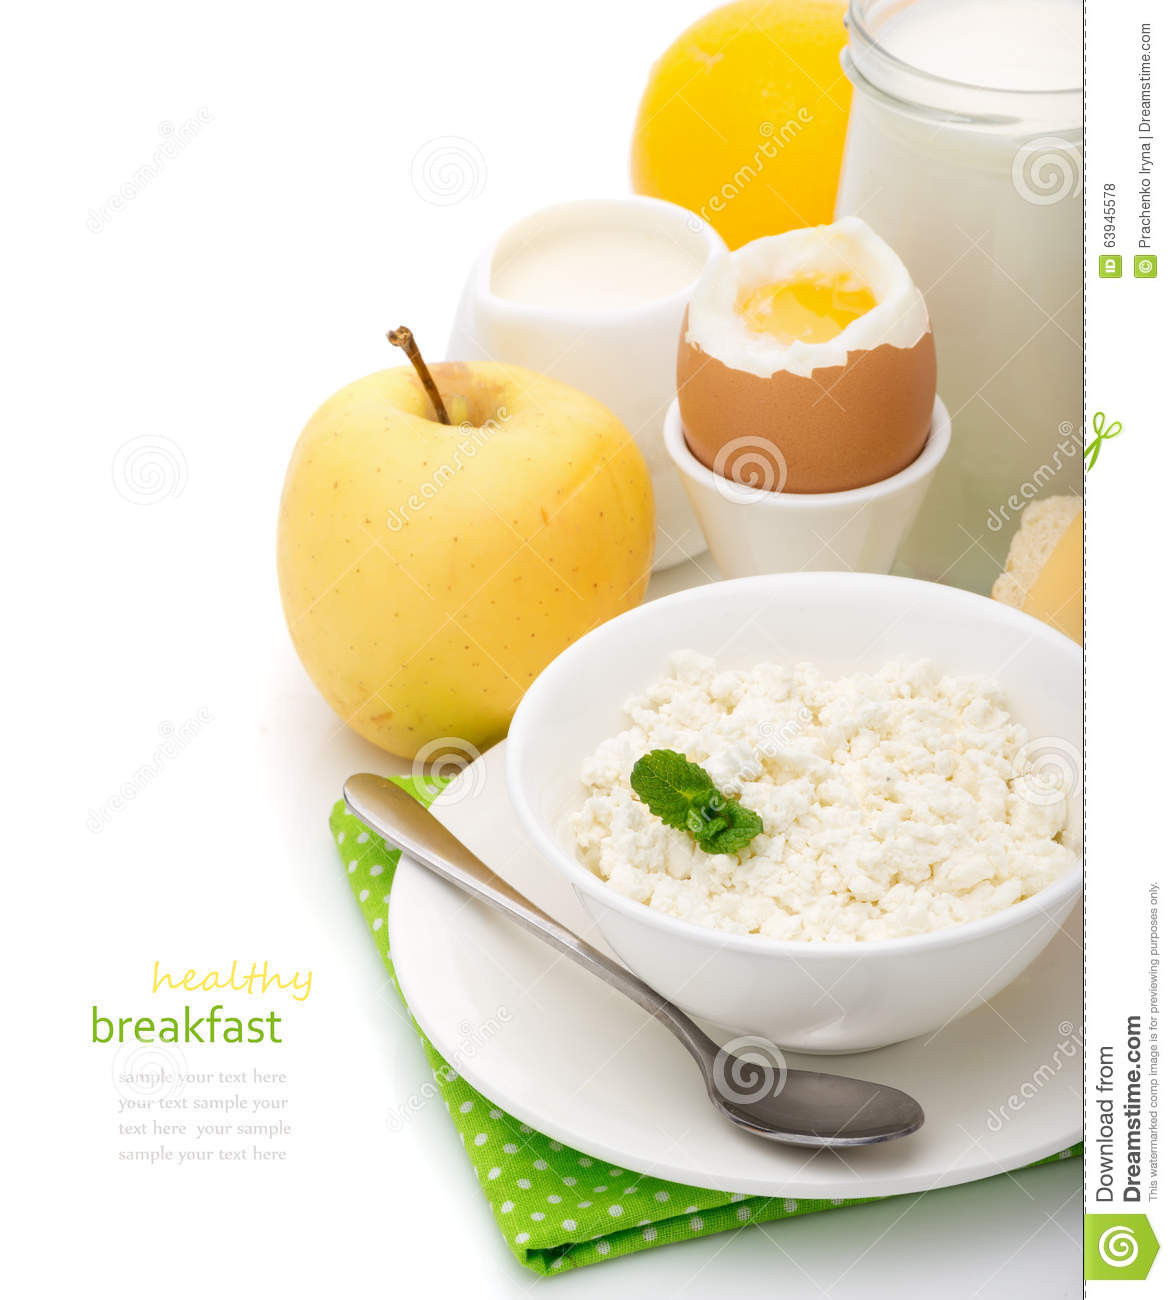 Delicious Healthy Breakfast
 Healthy Delicious Breakfast Dairy Products Stock